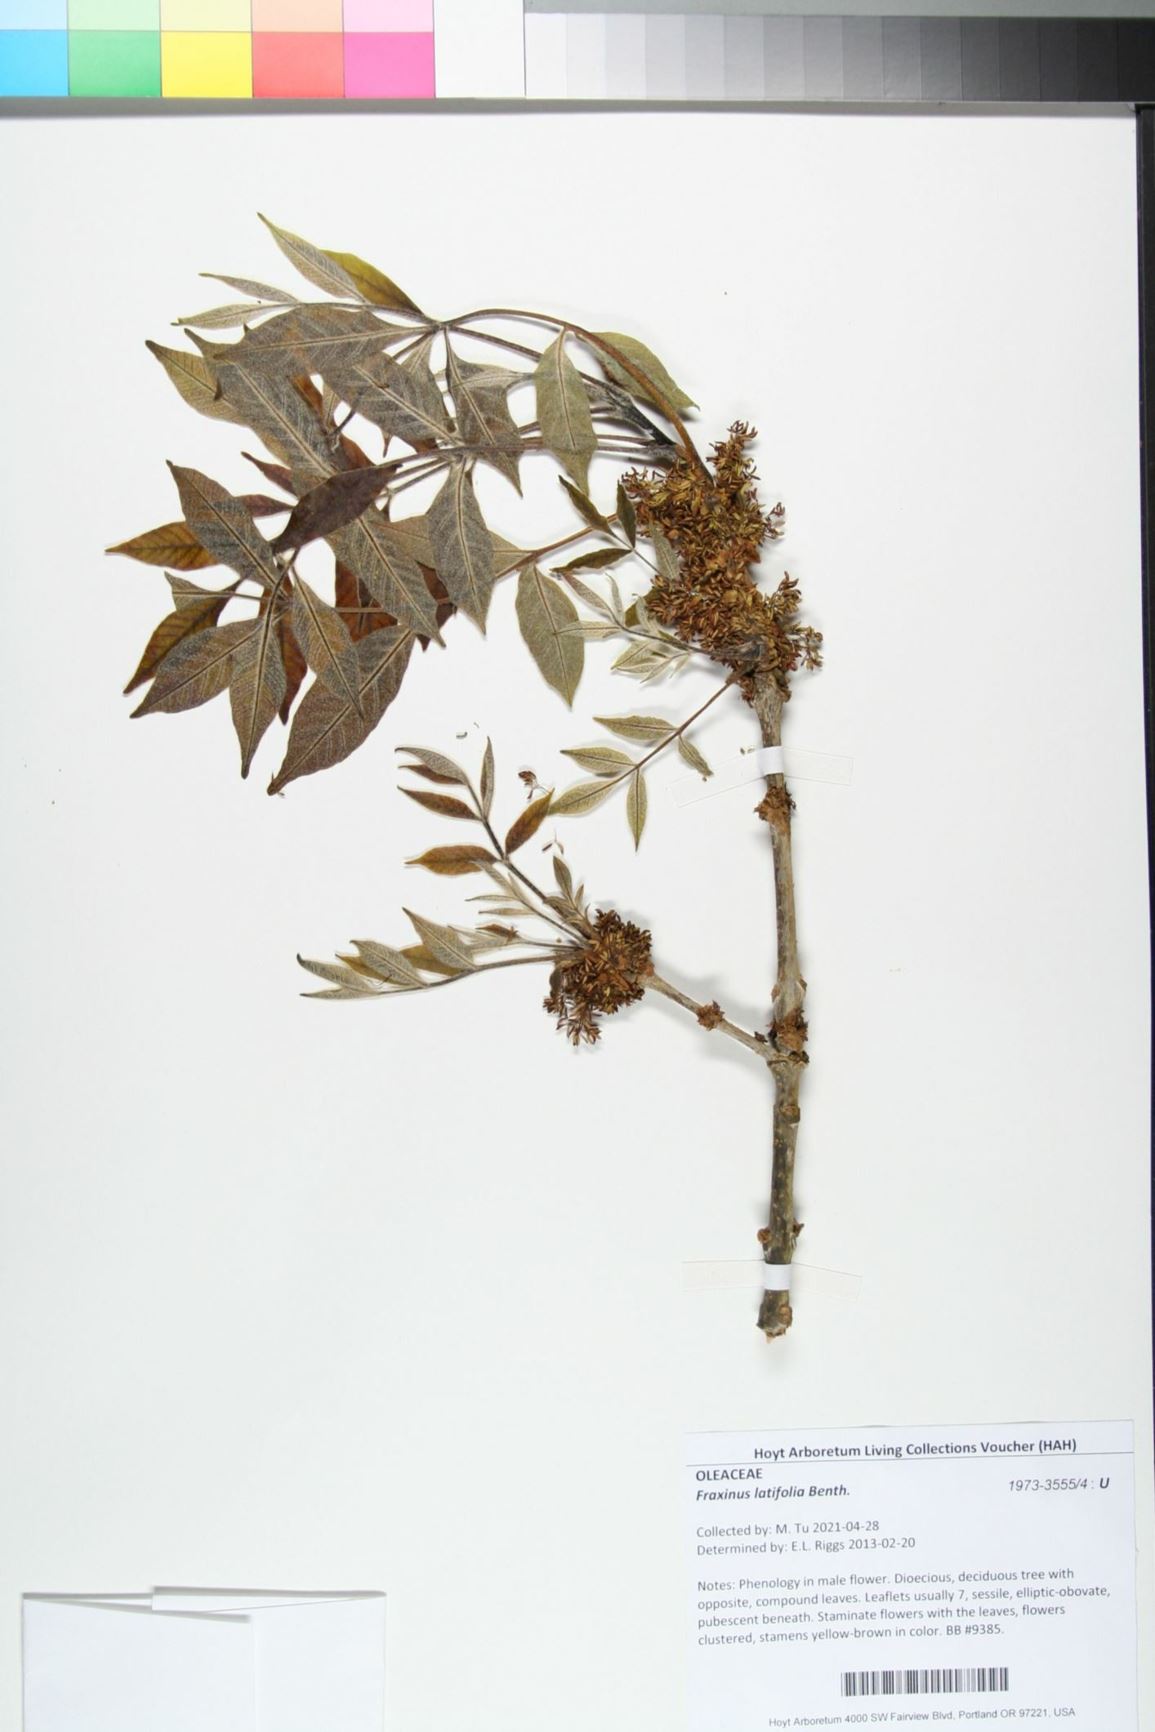 Fraxinus latifolia - Oregon ash